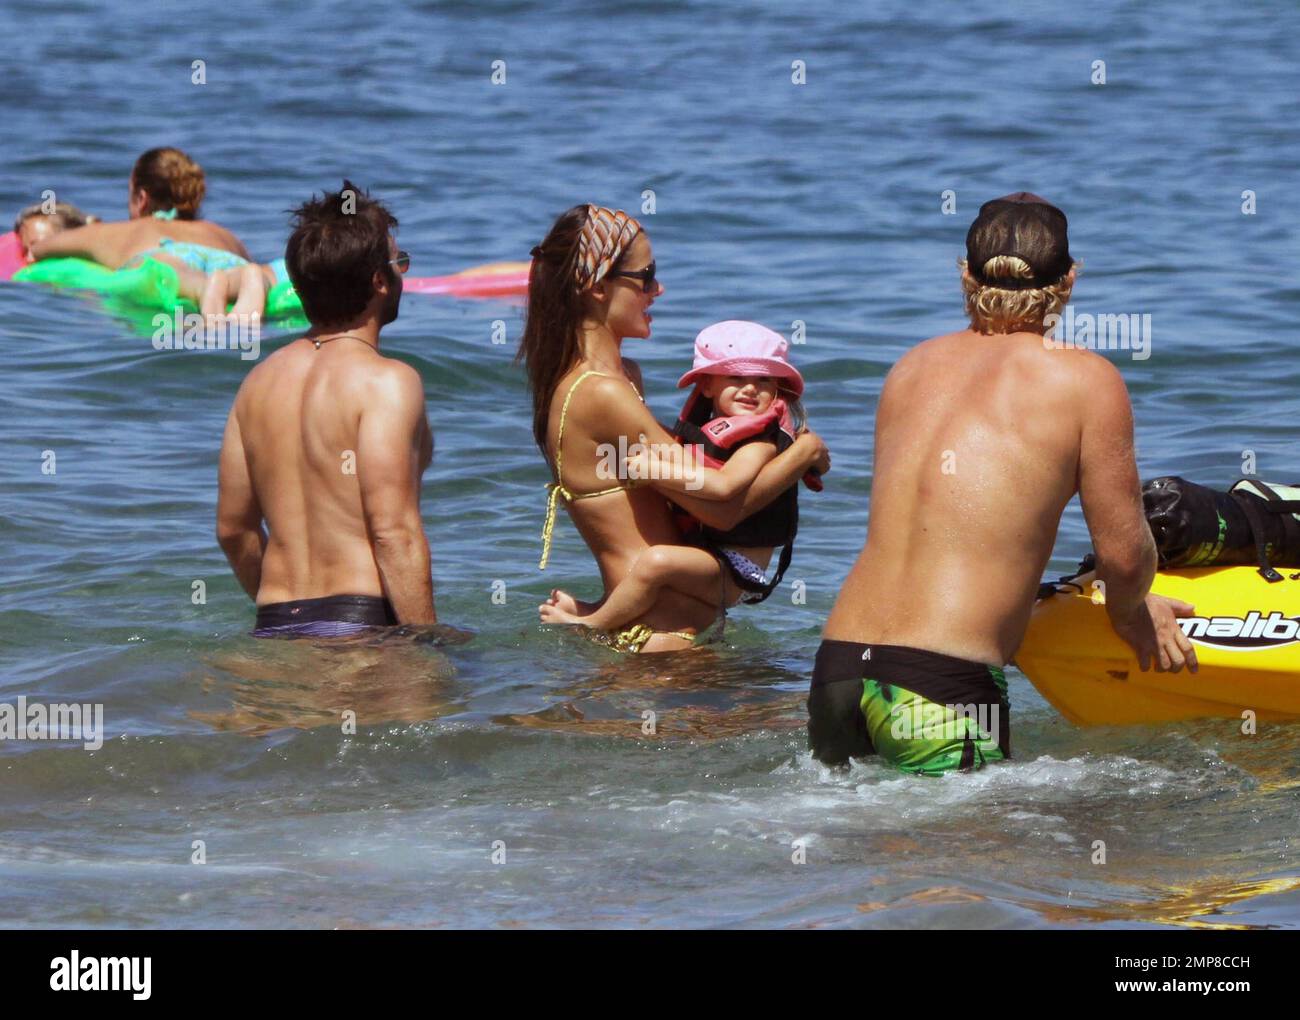 Victoria's Secret's Alessandra Ambrosio nip-slip during Malibu photoshoot